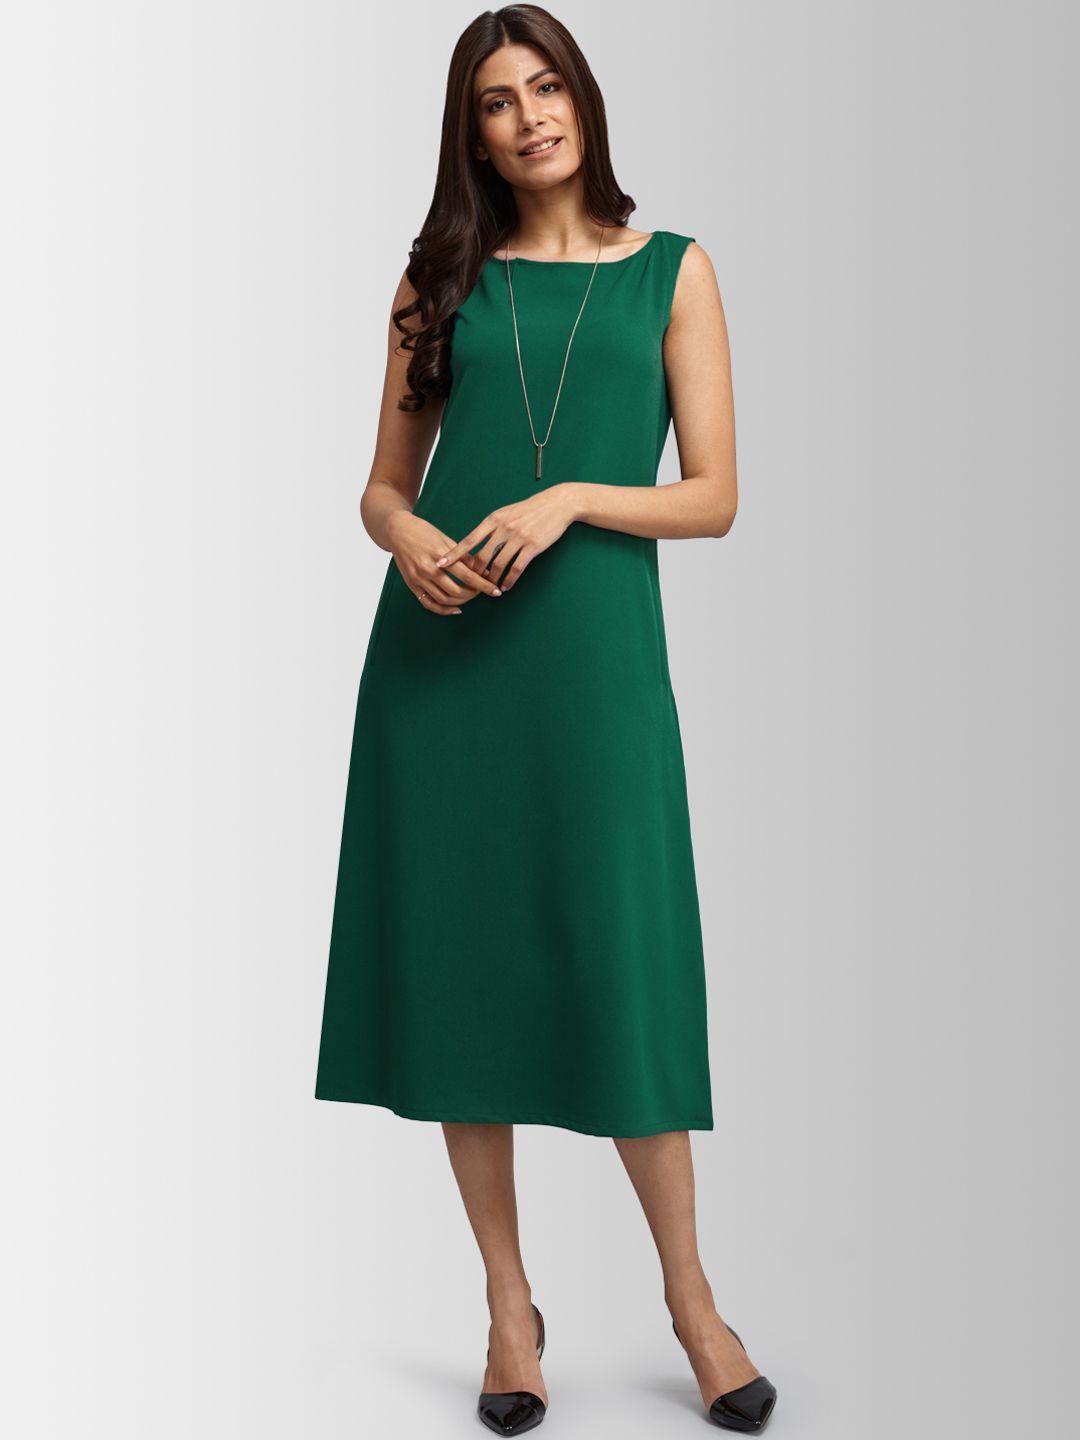 fablestreet women solid green a-line dress